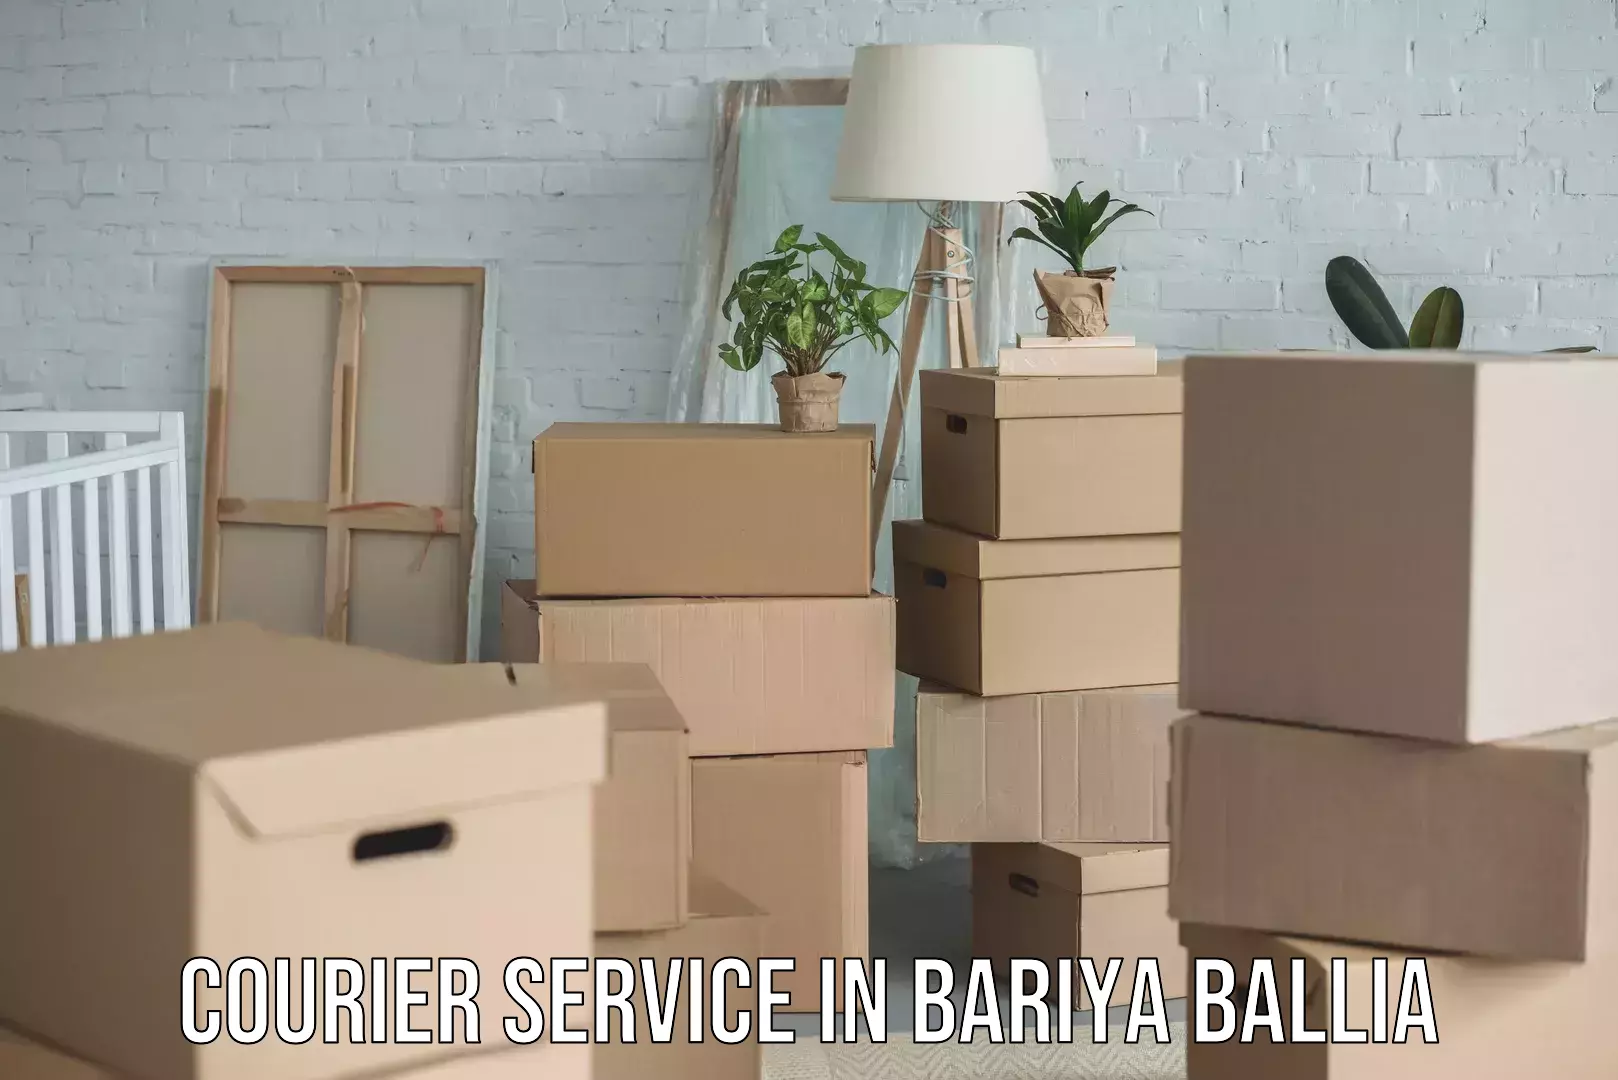 Multi-service courier options in Bariya Ballia